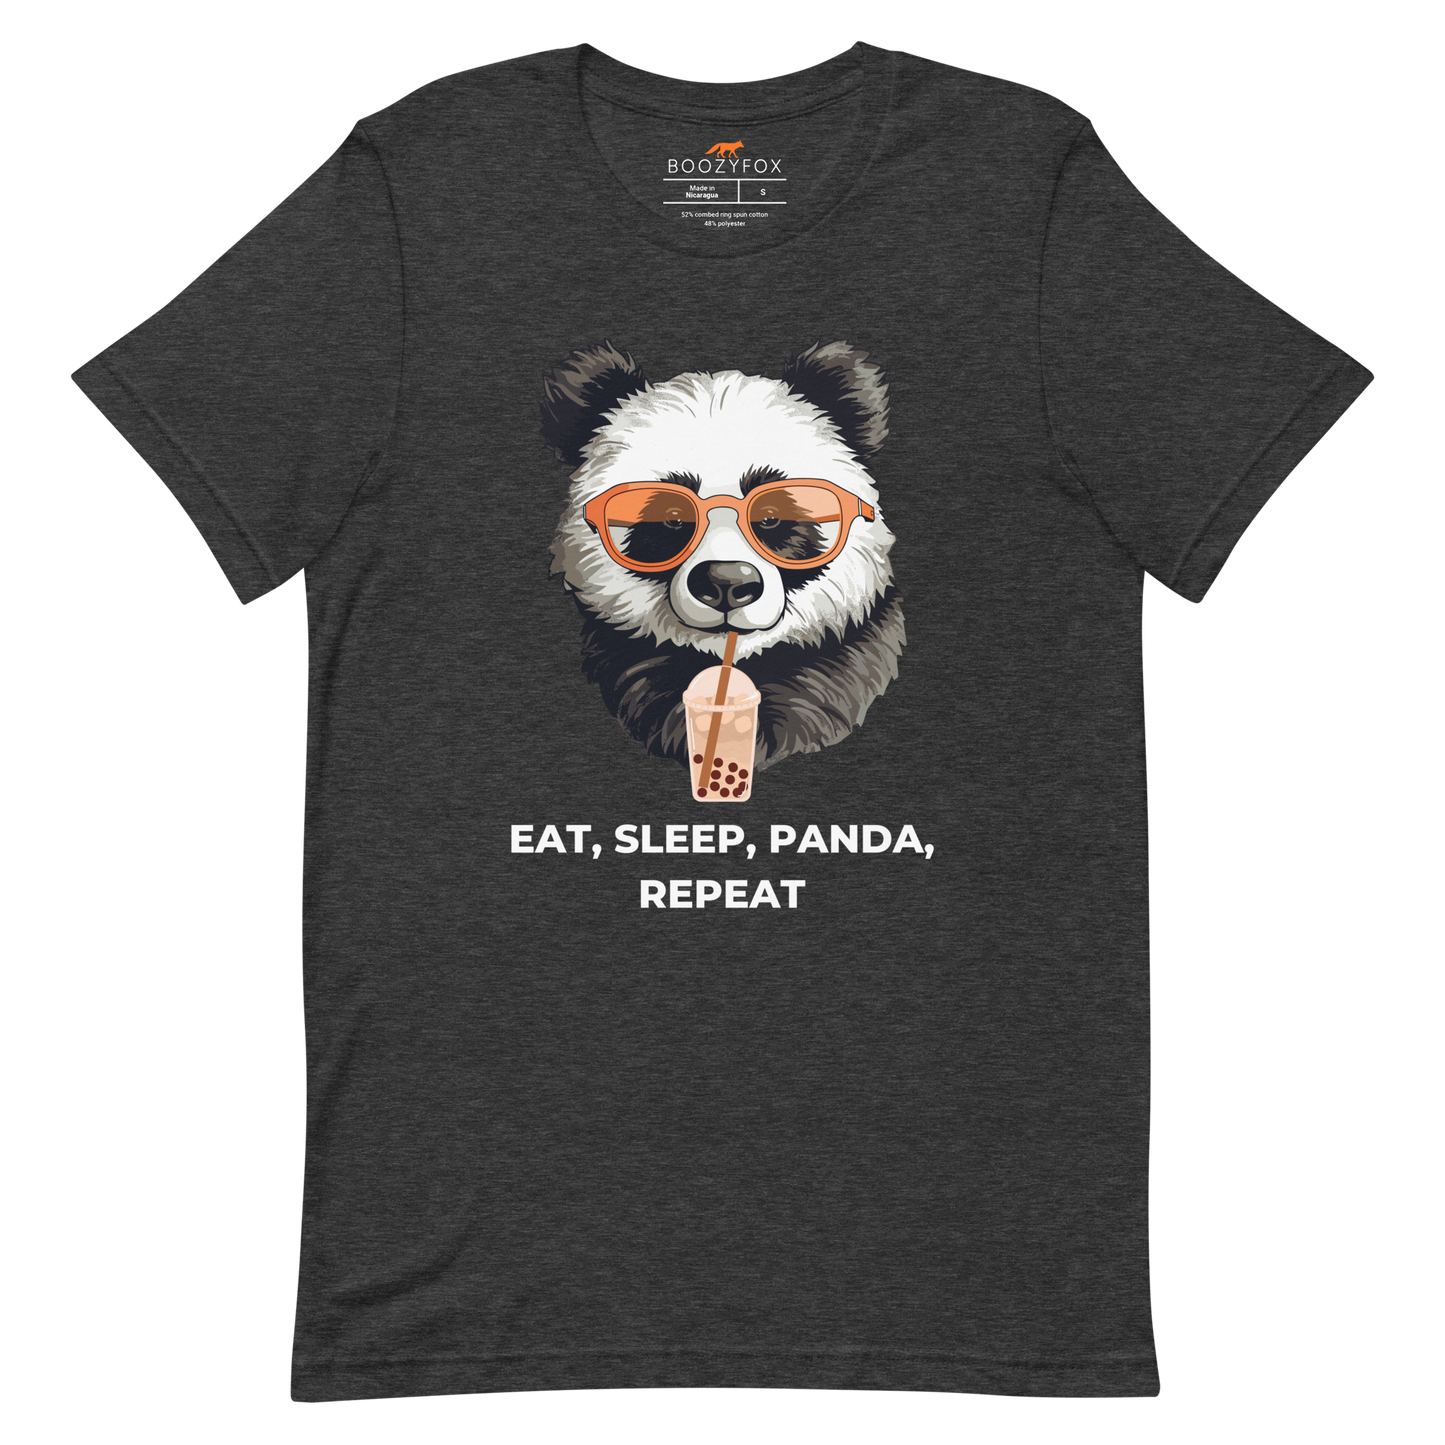 Dark Grey Heather Premium Panda Tee featuring an adorable Eat, Sleep, Panda, Repeat graphic on the chest - Funny Graphic Panda Tees - Boozy Fox